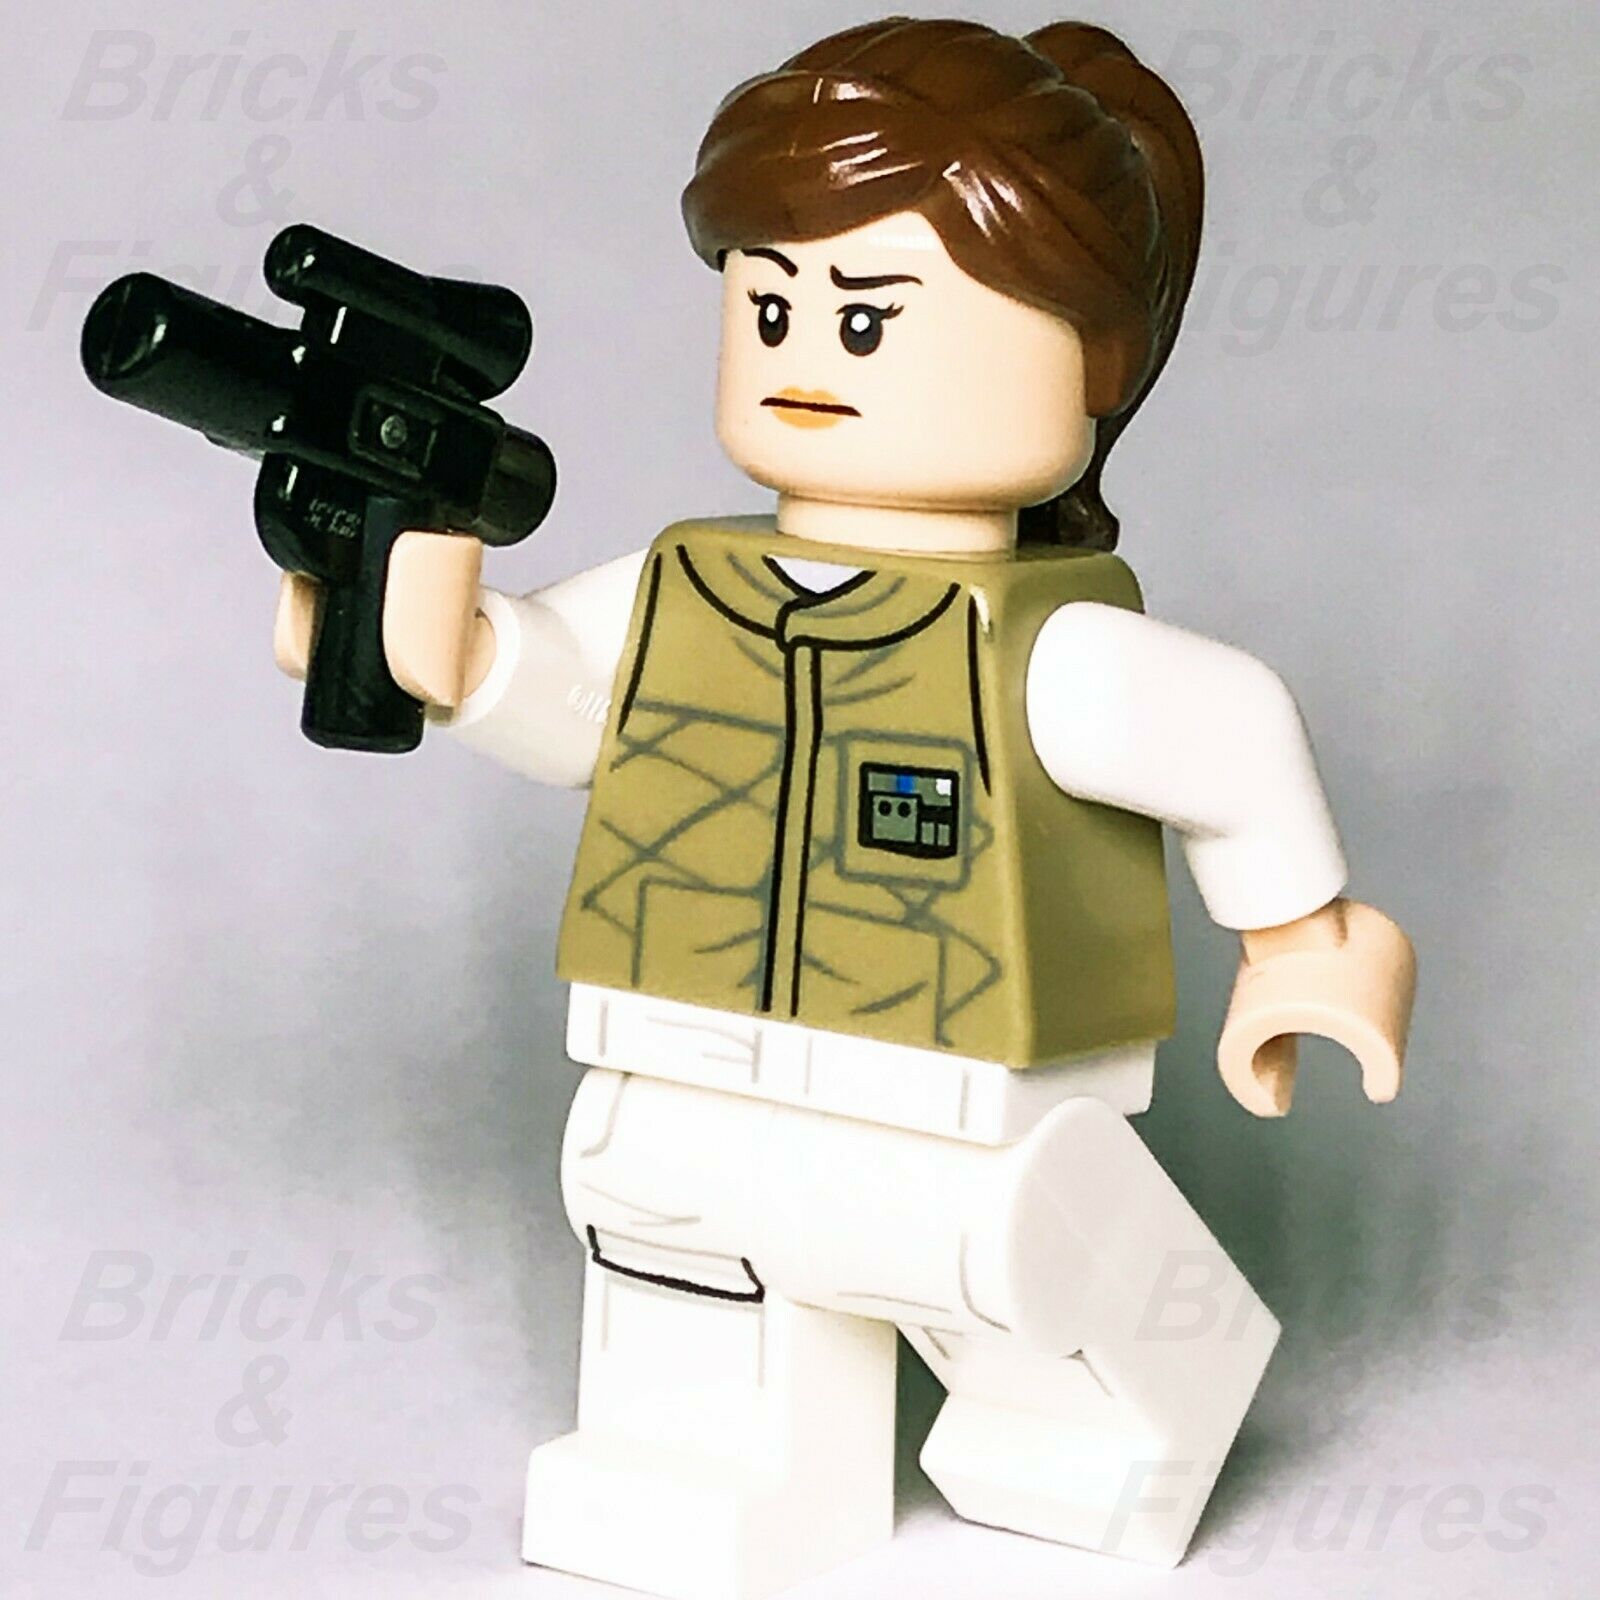 New Star Wars LEGO Toryn Farr Rebel Alliance Hoth Outfit Minifigure 75098 - Bricks & Figures